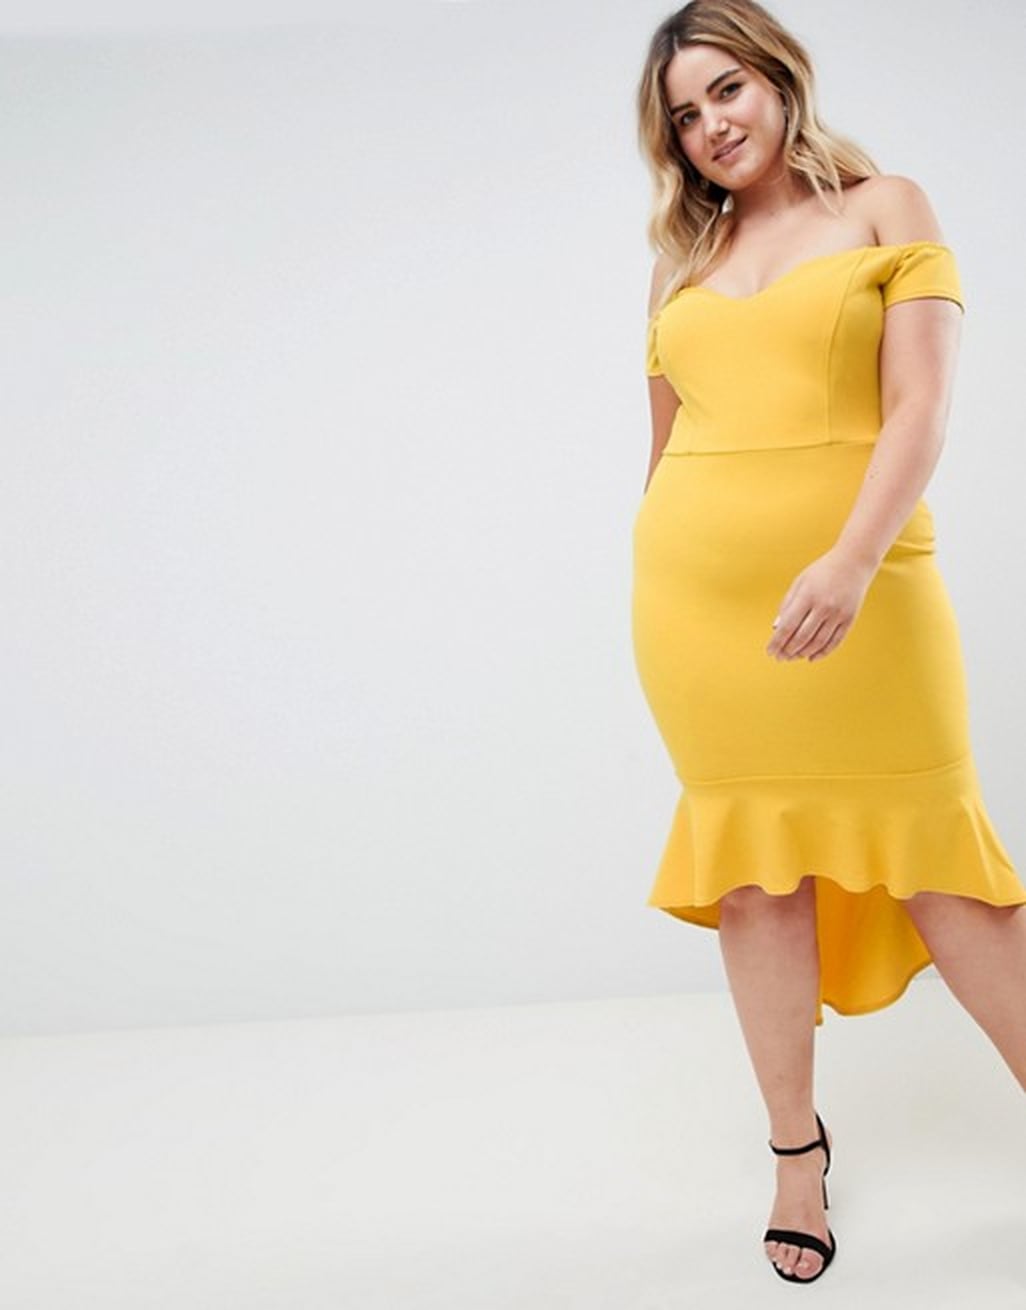 Meghan Markle Yellow Brandon Maxwell Dress | POPSUGAR Fashion